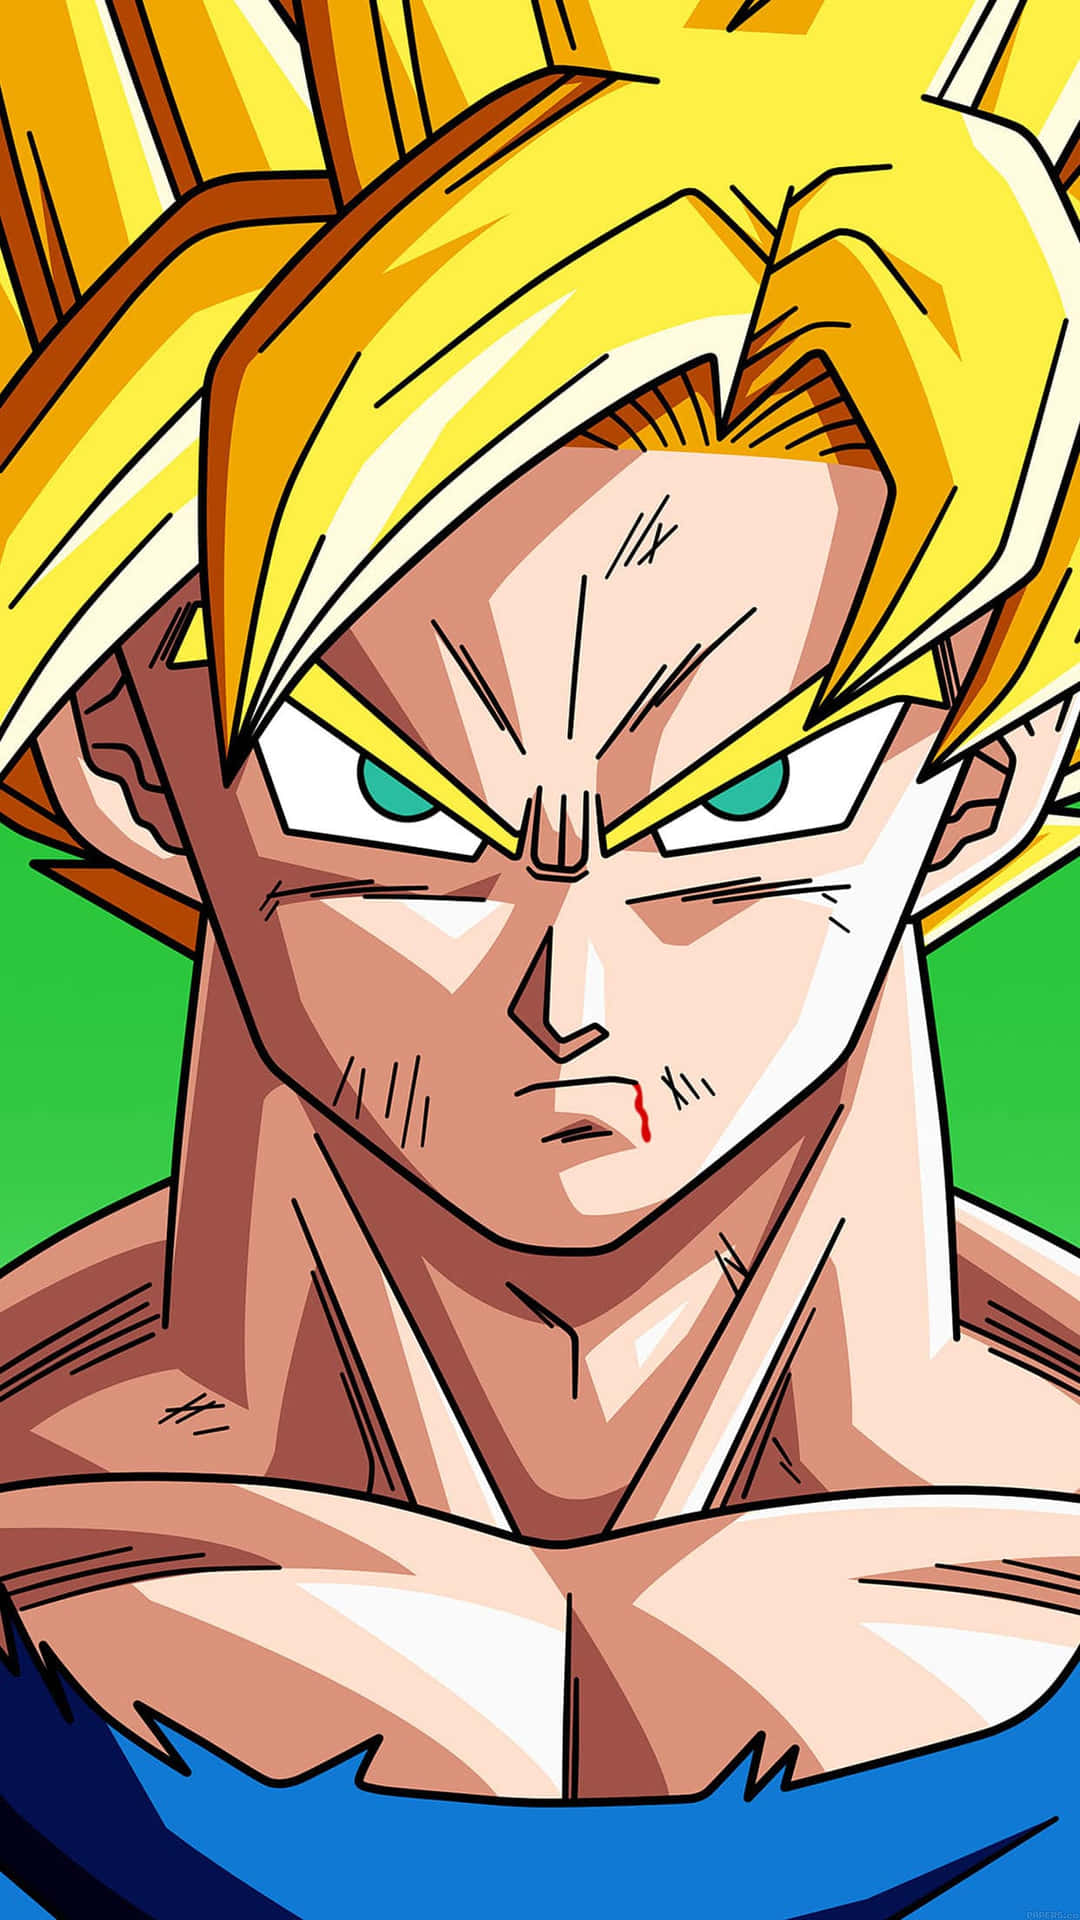 Werdemit Angry Goku Zum Super Saiyajin! Wallpaper